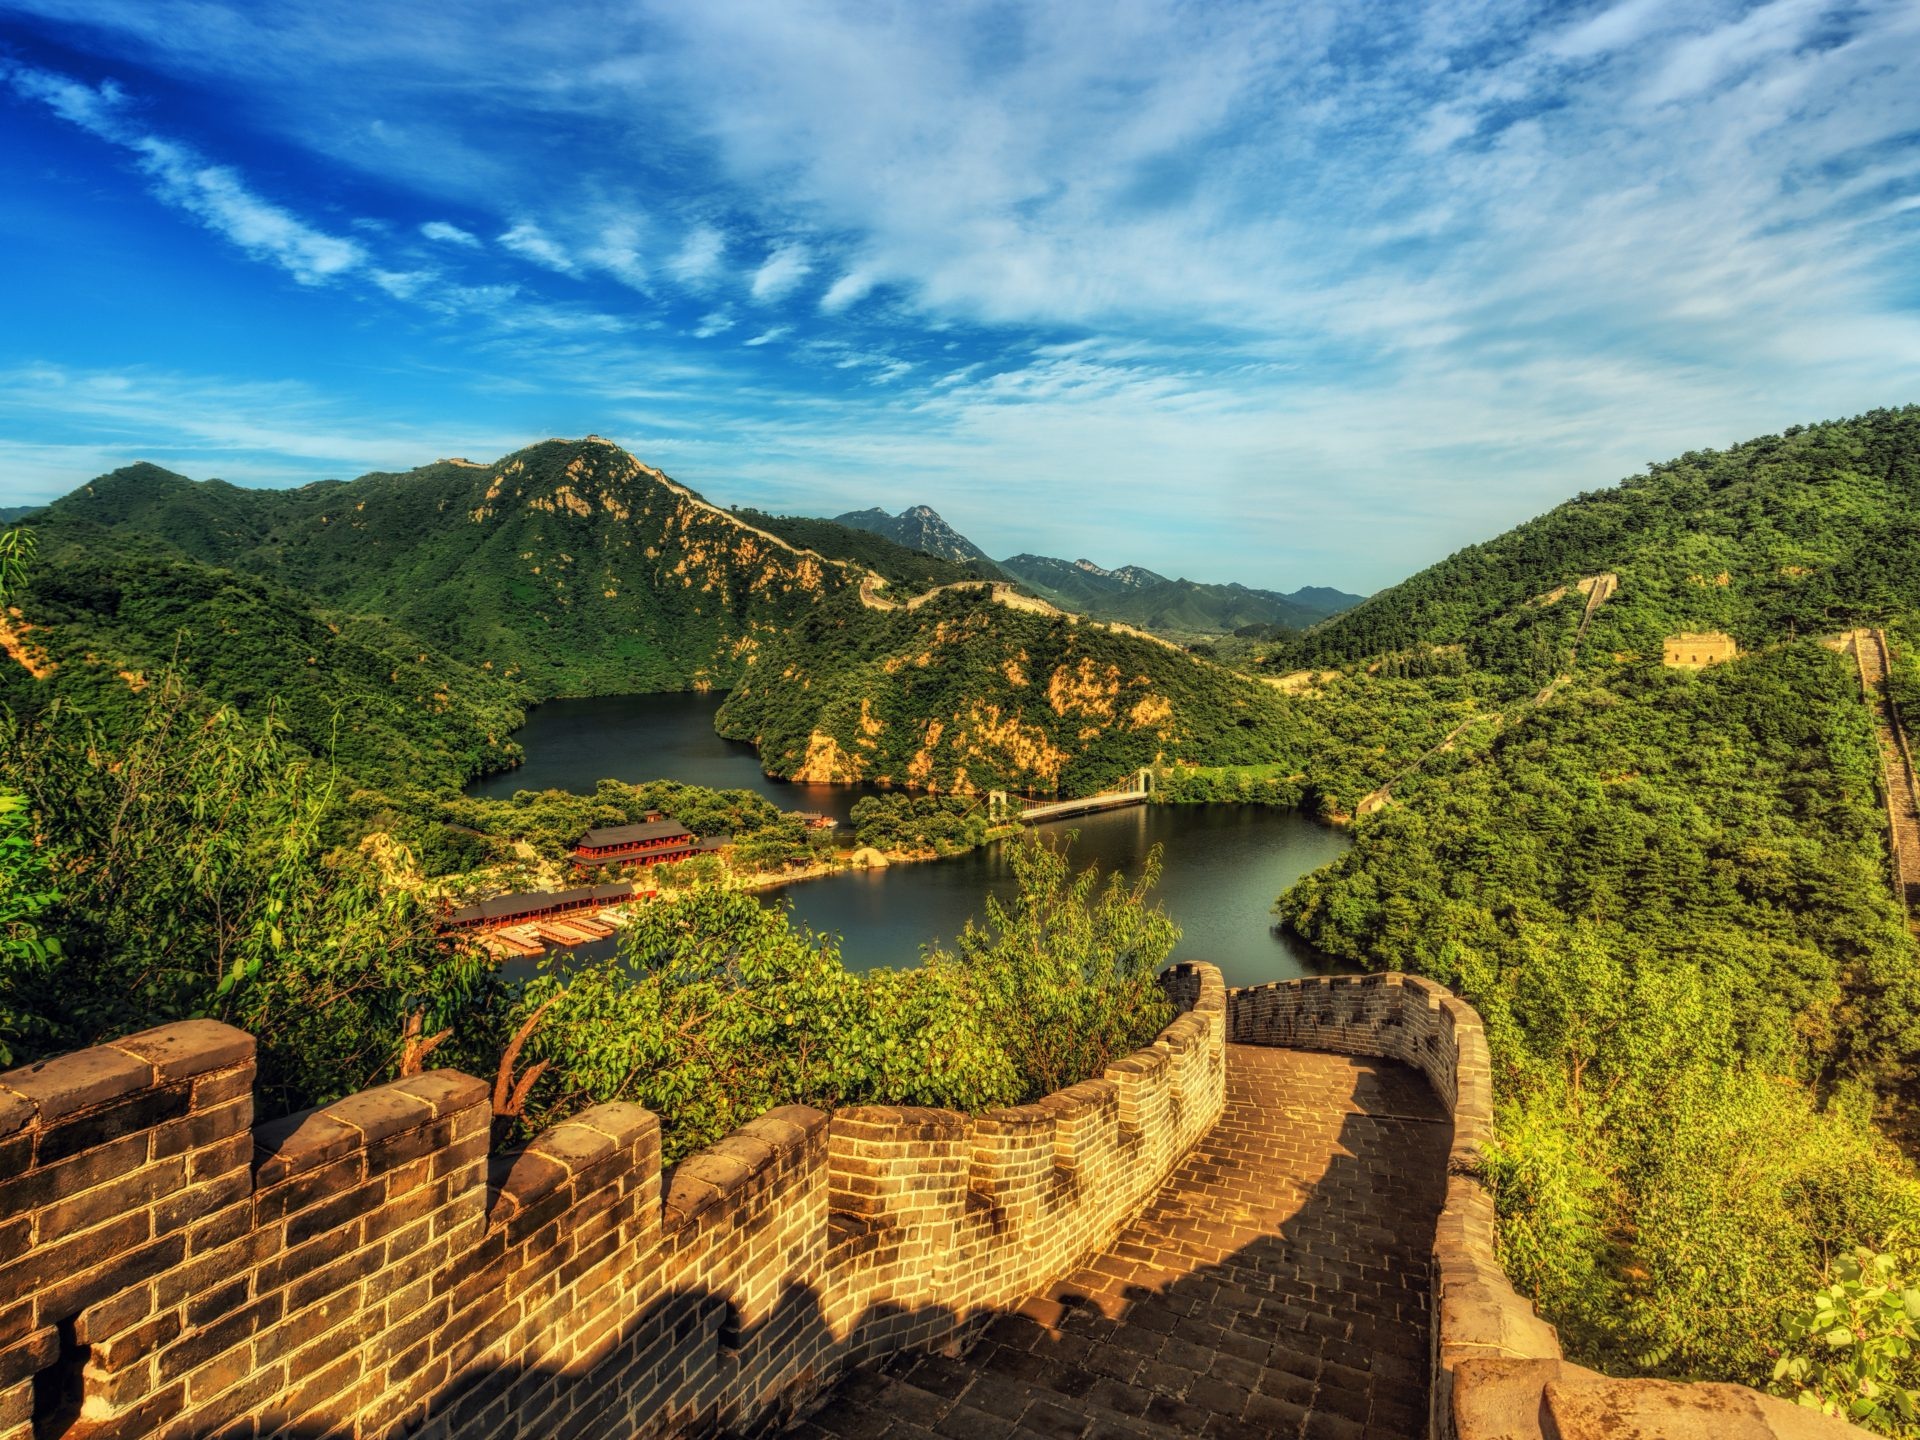 Great Wall of China: The most popular sections are Badaling, Mutianyu, and Jinshanling. 1920x1440 HD Wallpaper.